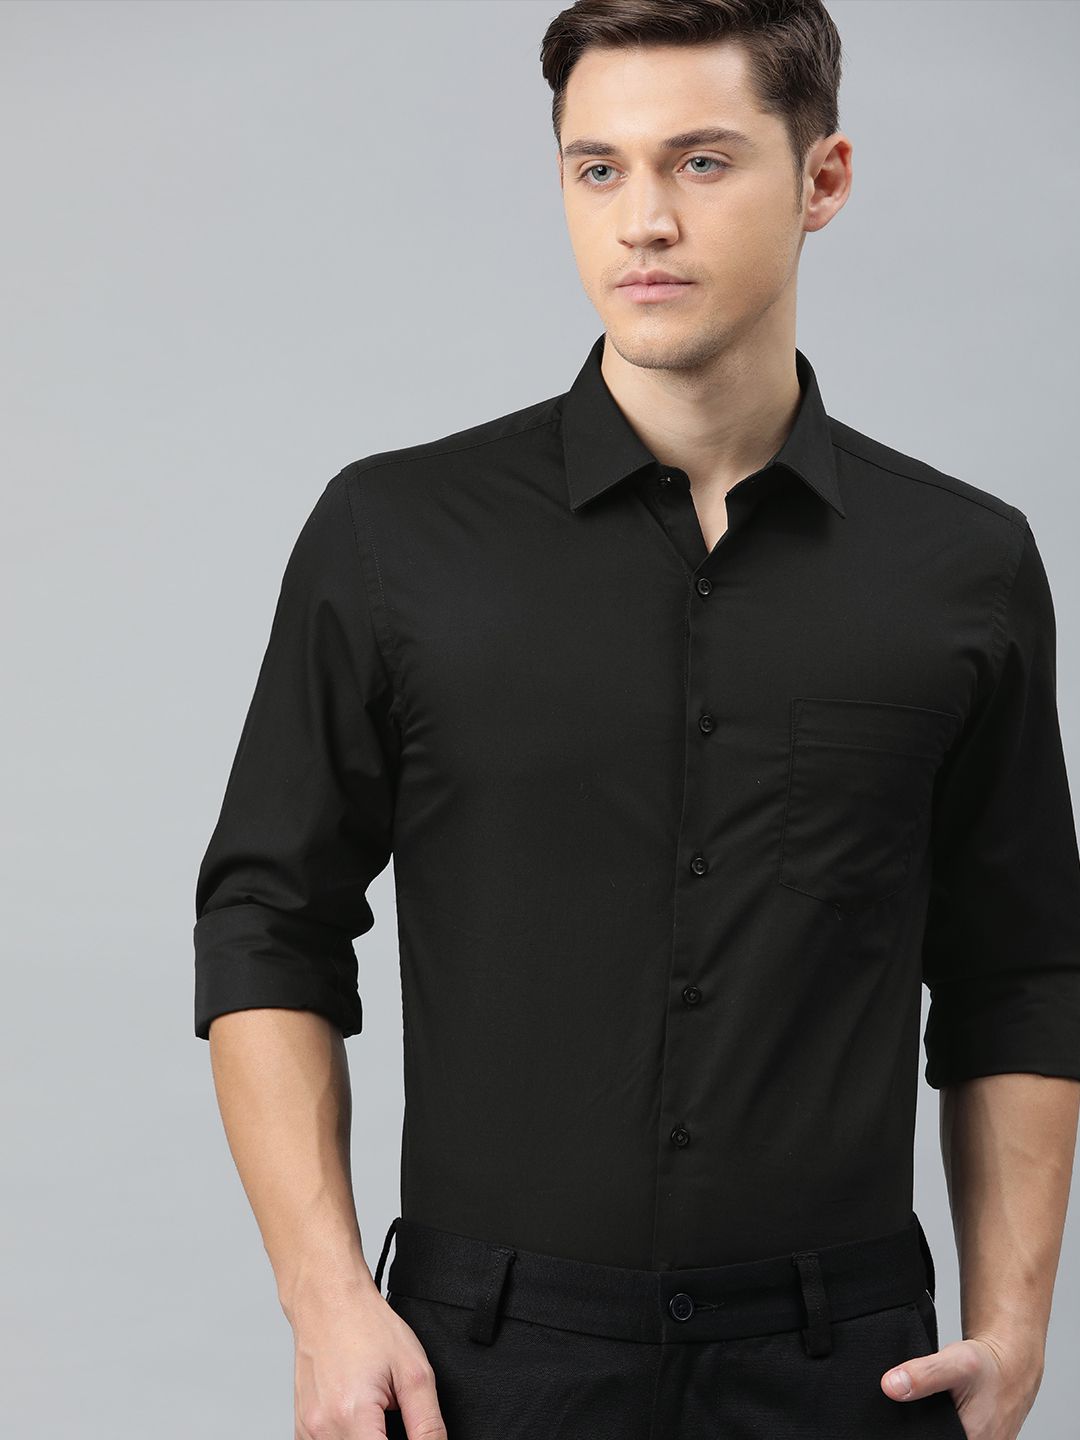 IVOC - Black 100% Cotton Slim Fit Men's Casual Shirt ( Pack of 1 )